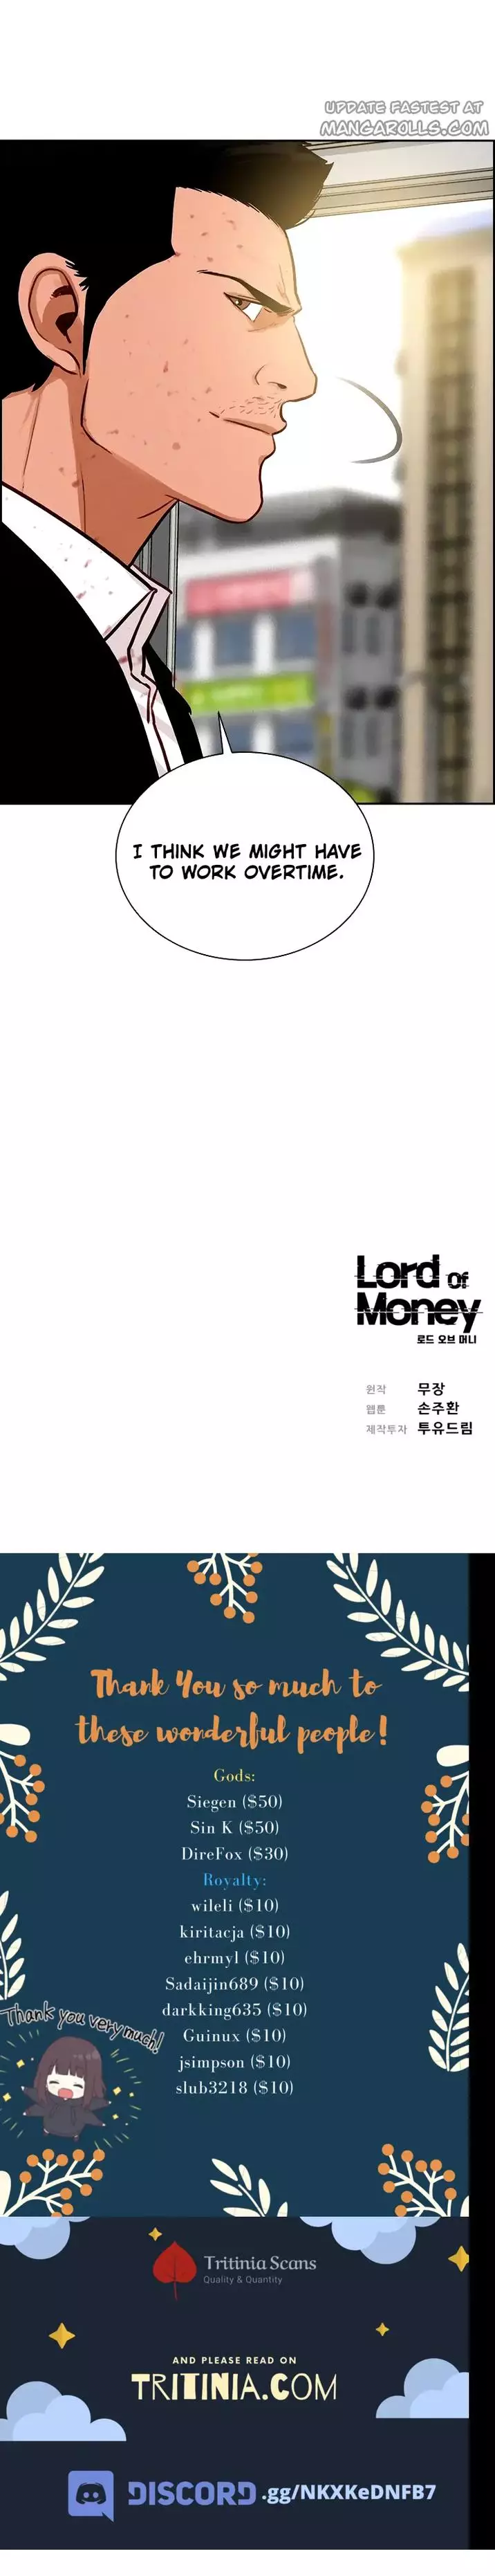 Lord Of Money - 101 page 27-0b693bdf